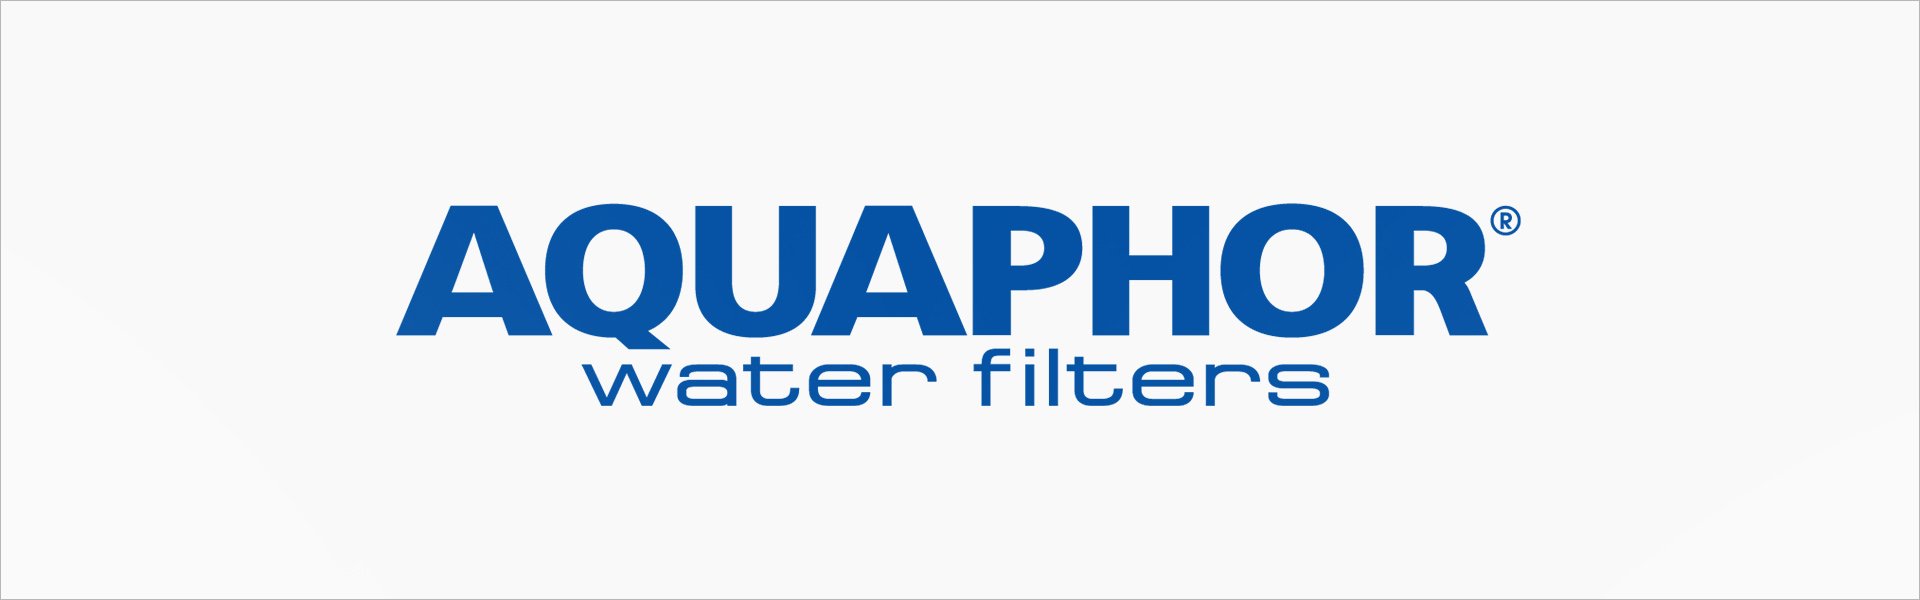 Aquaphor A5 2/1 Aquaphor